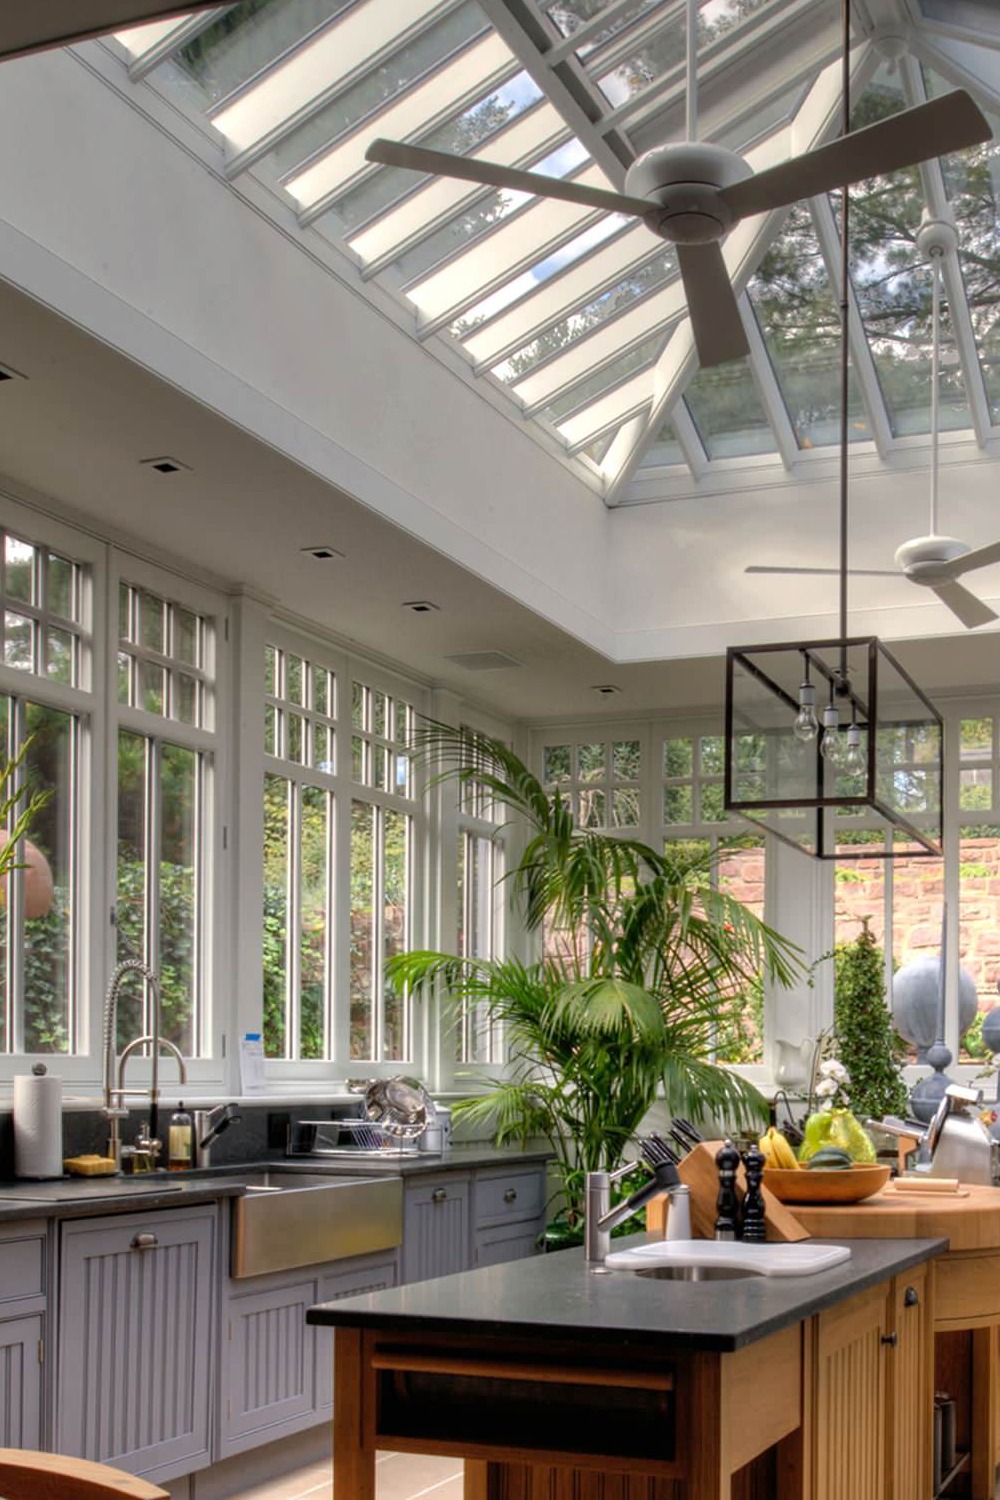 Full Natural Light Fresh Air Interior Design Skylights Glass Ceiling House Windows